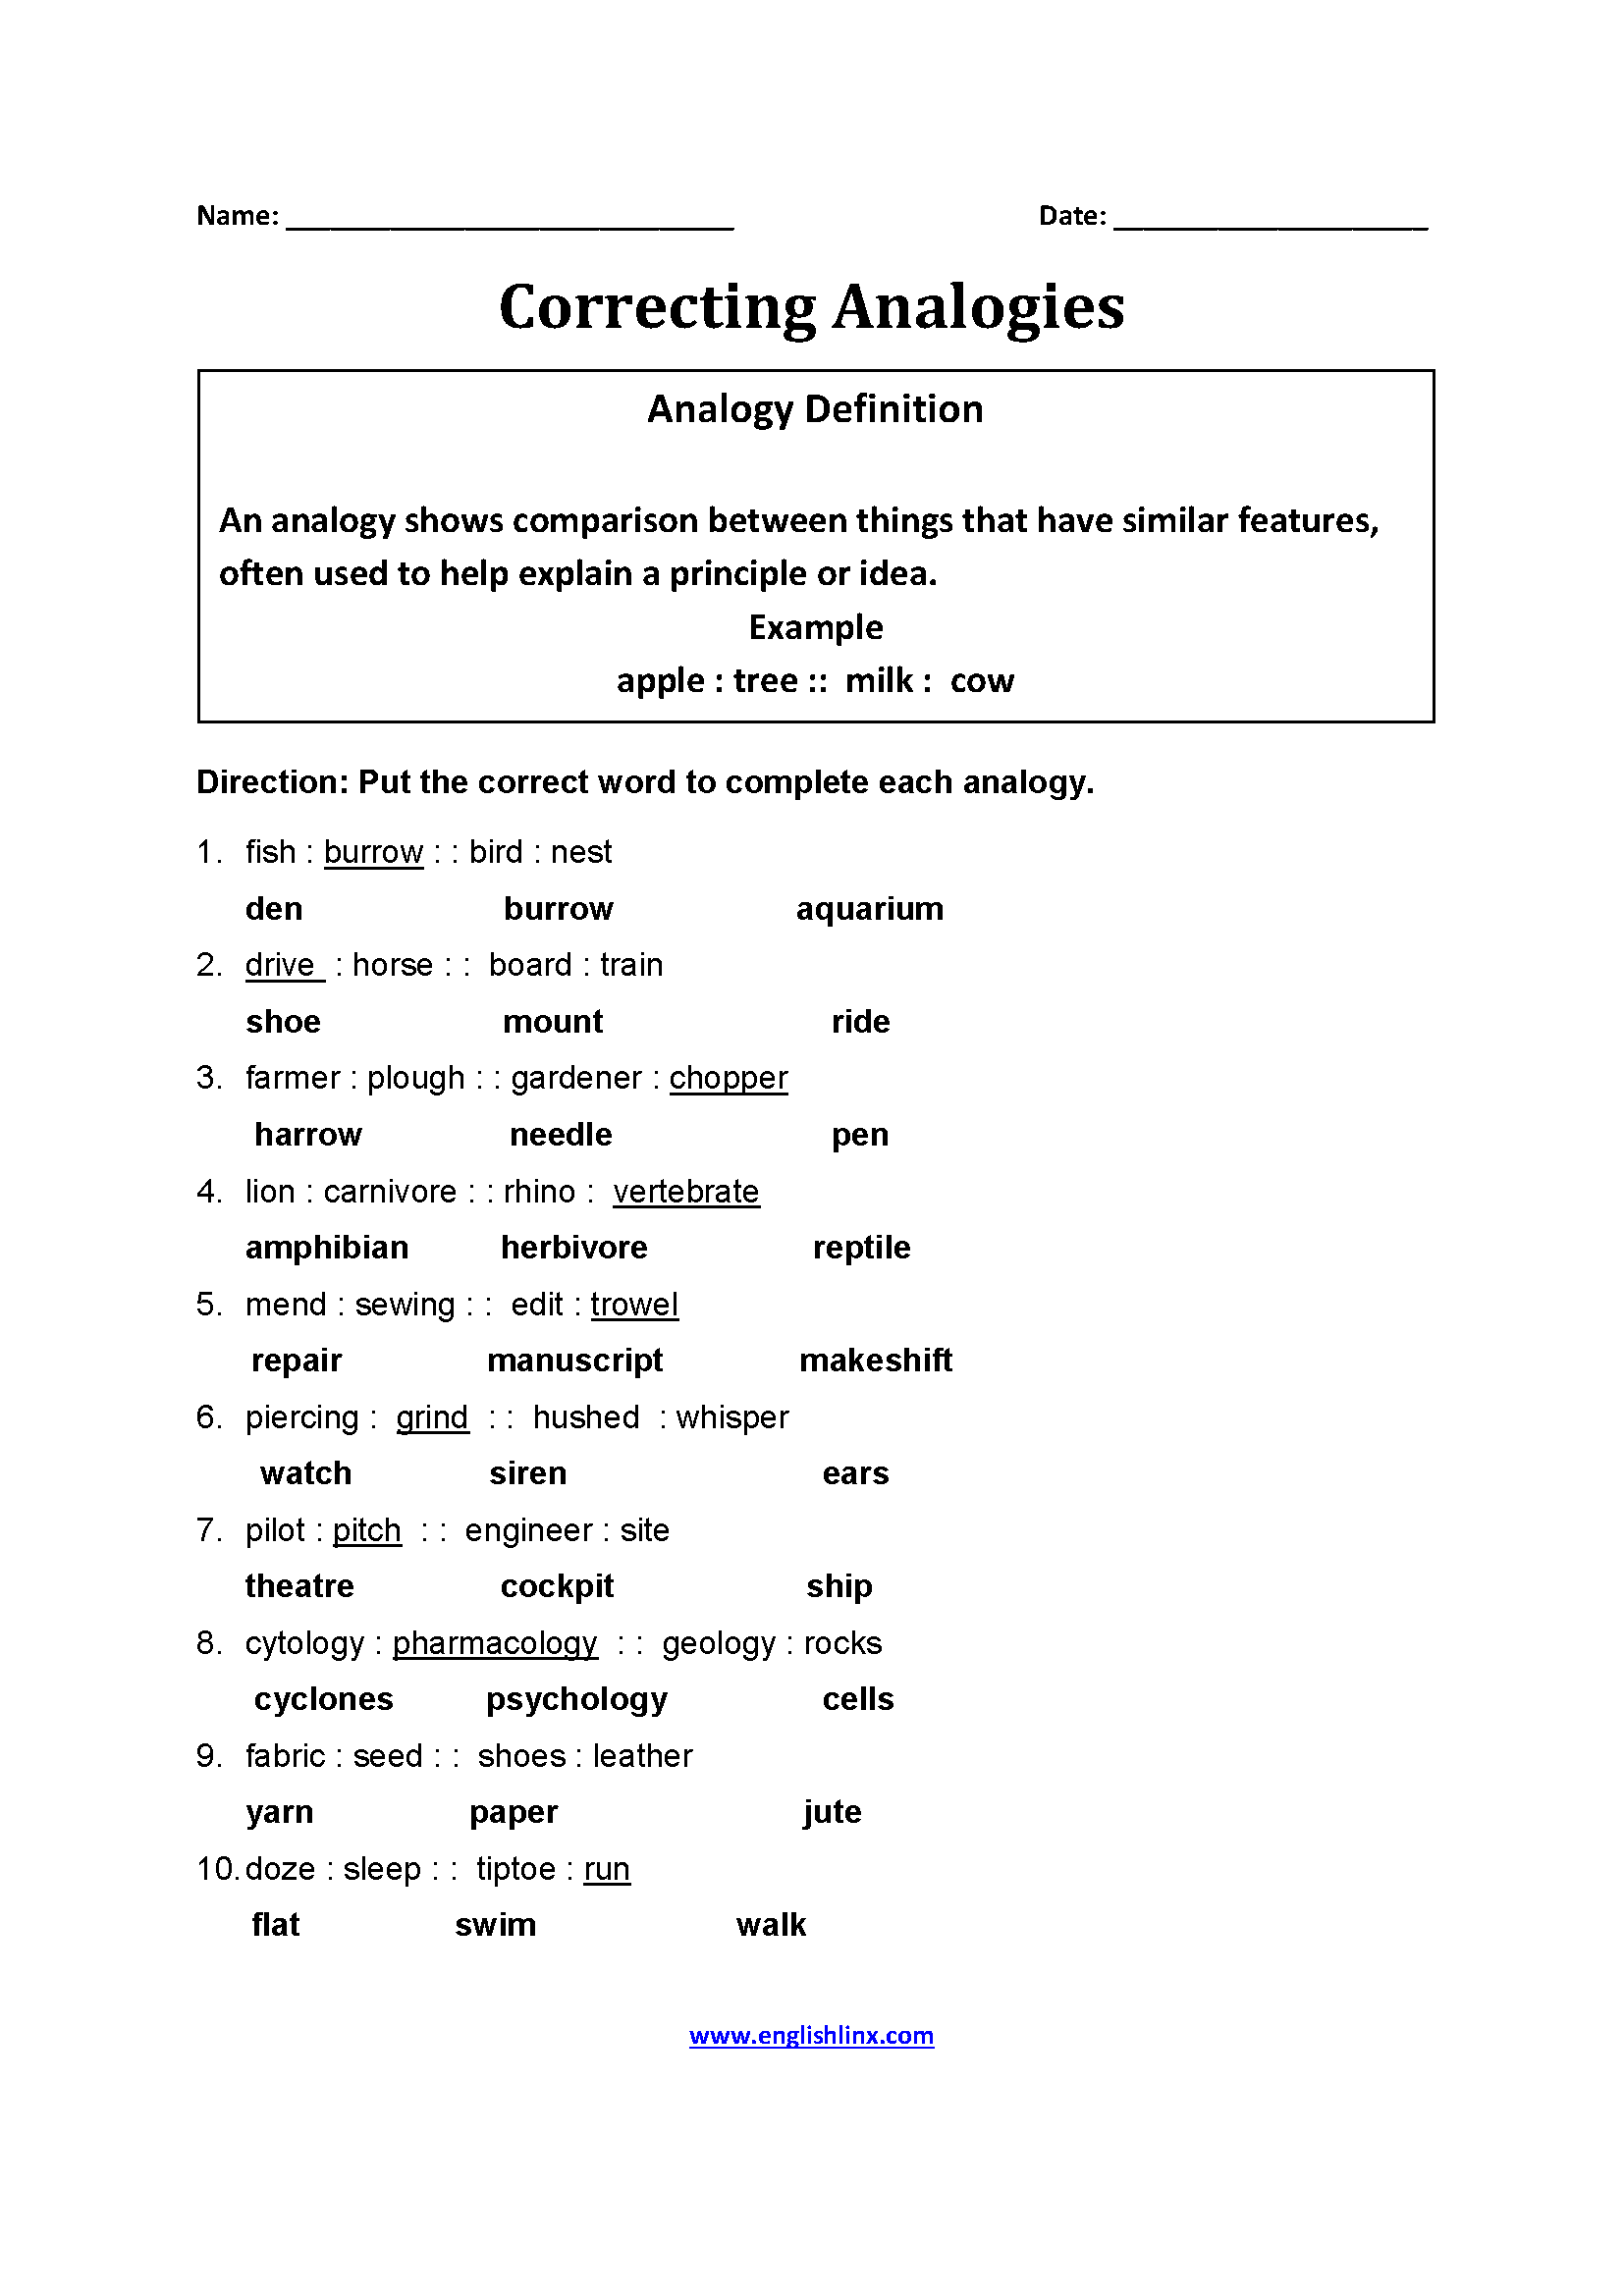 printable-free-analogy-worksheets-101-activity